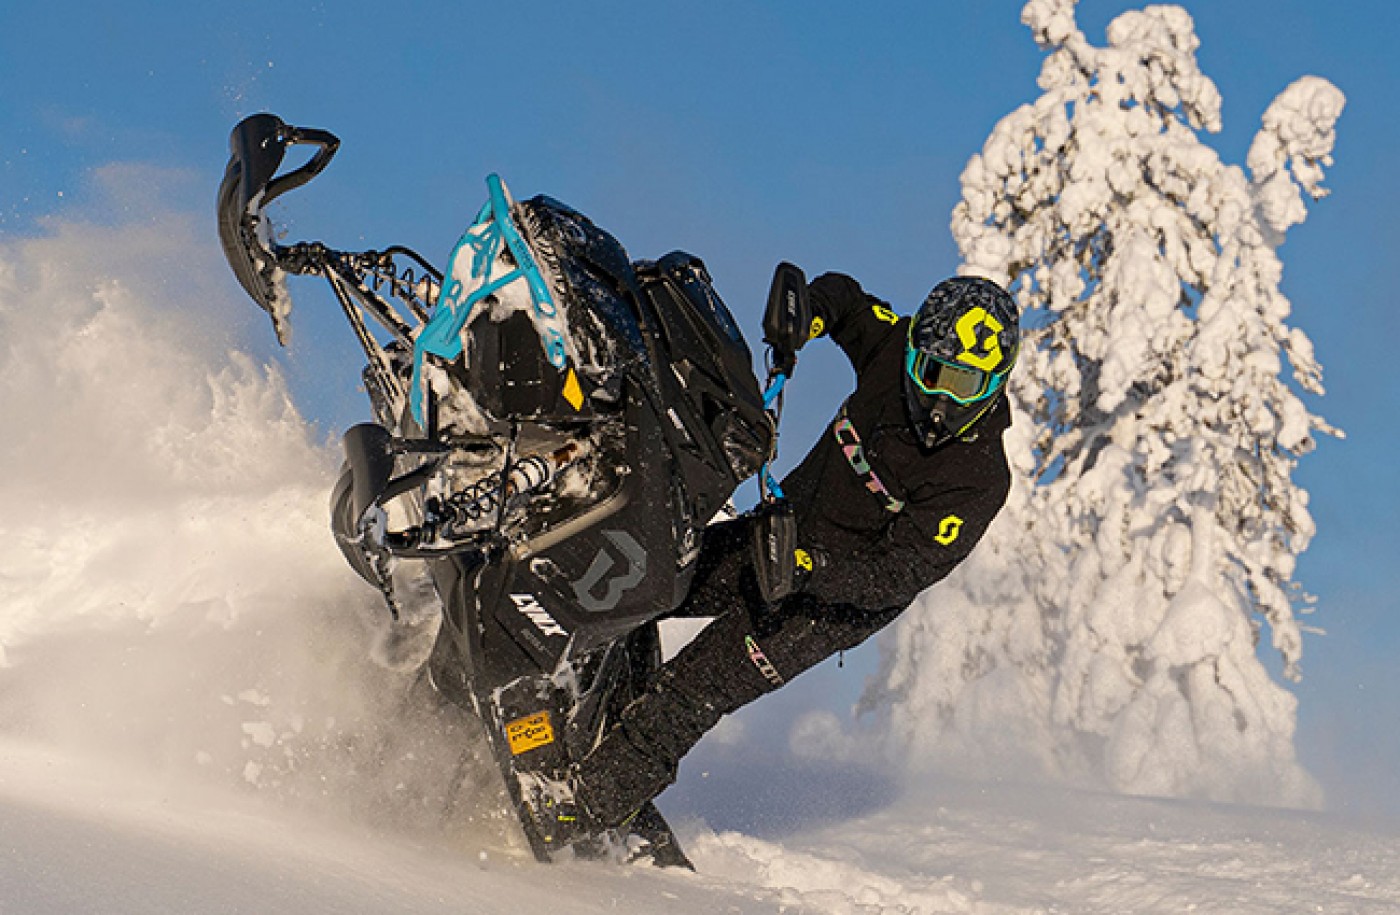 Cum alegi echipamentul pentru snowmobil: sfaturi și recomandări